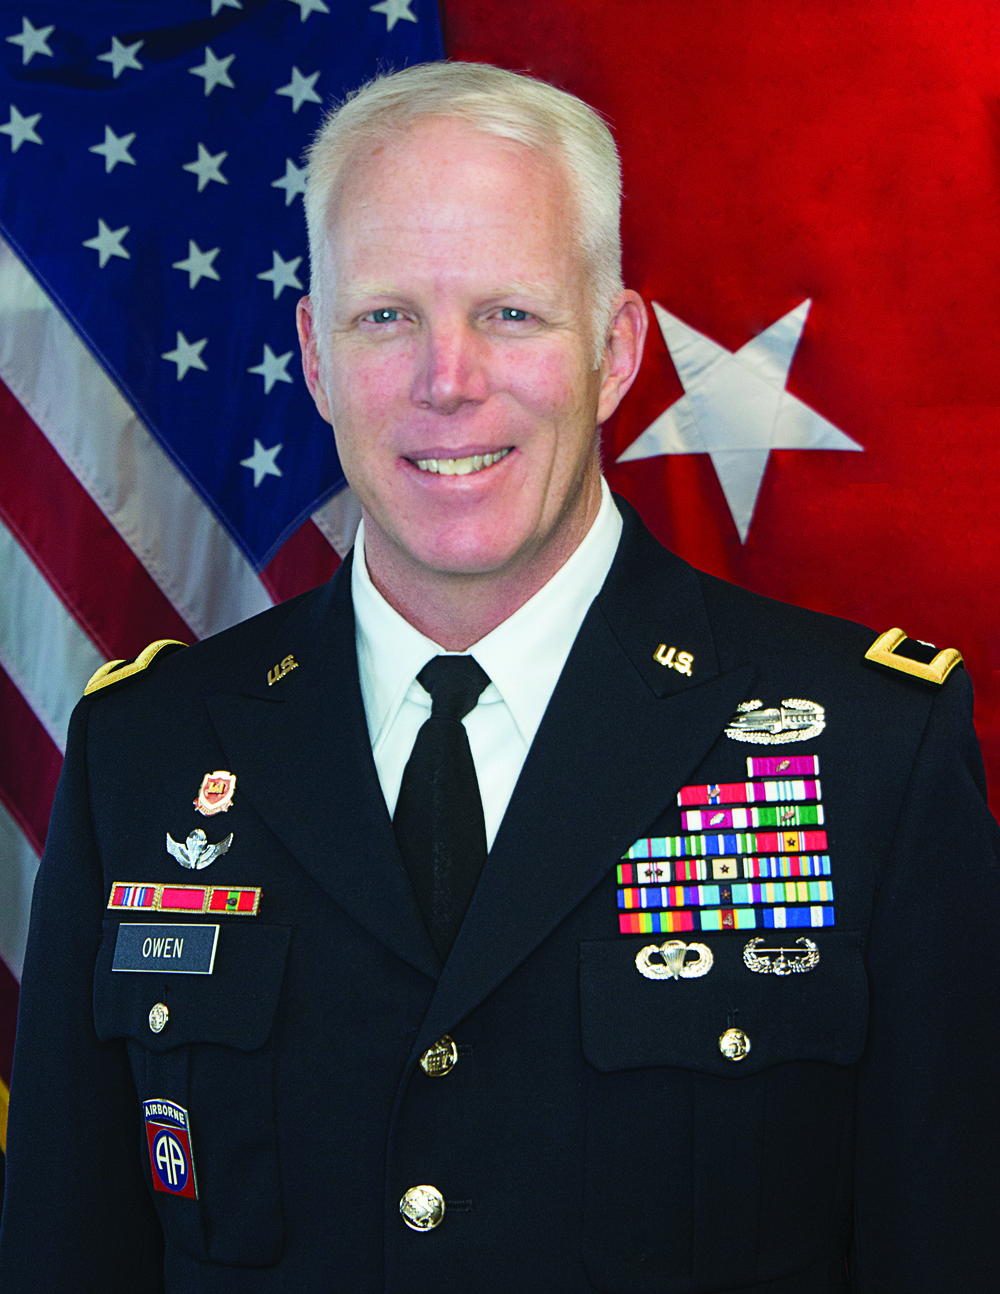 Brigadier General Paul E. Owen